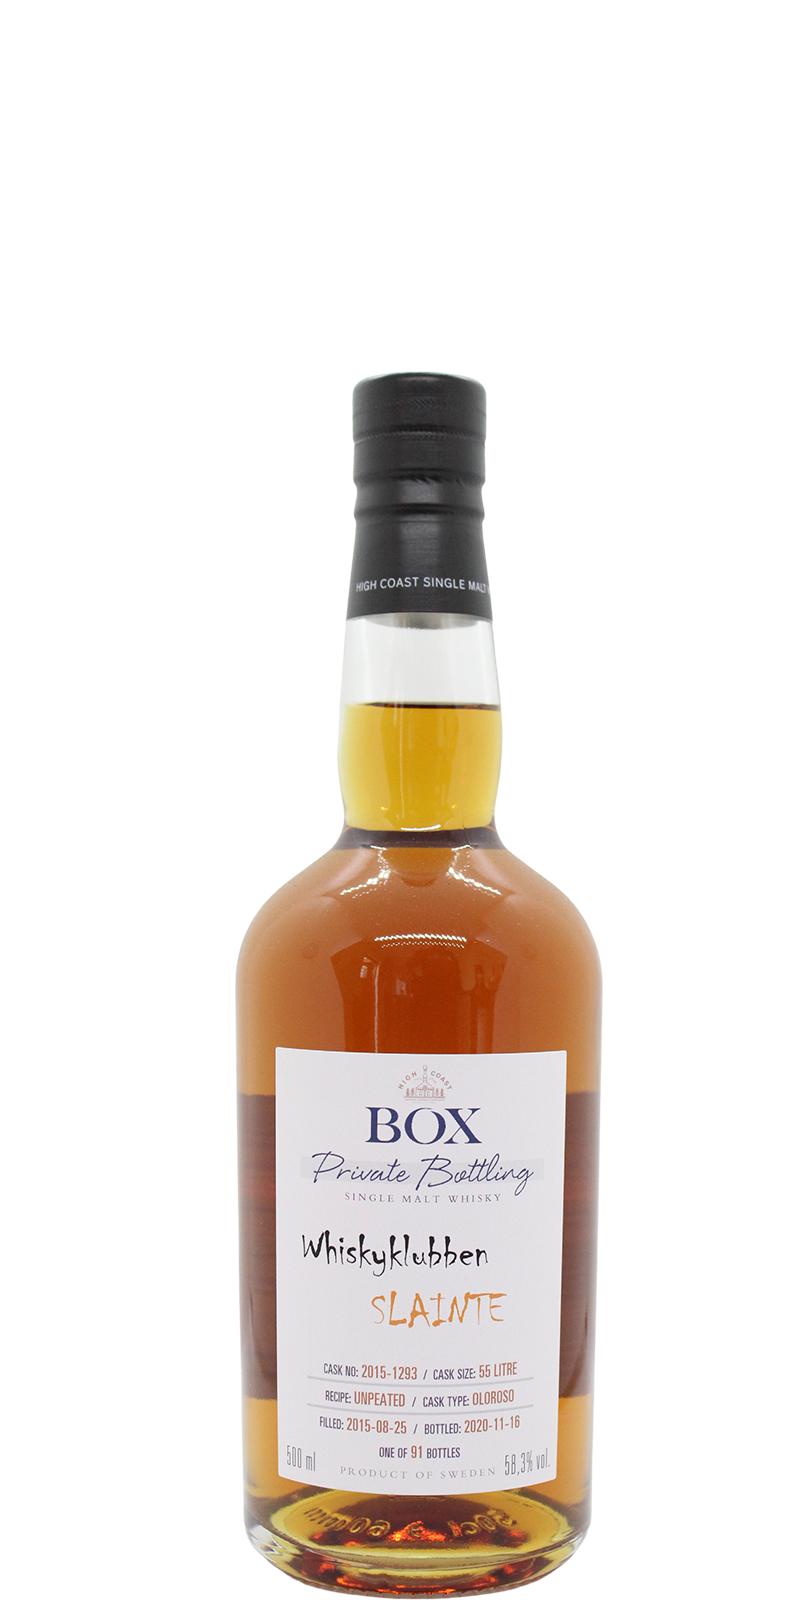 Box 2015 WSla Oloroso 2015-1293 Whiskyklubben Slainte 58.3% 500ml